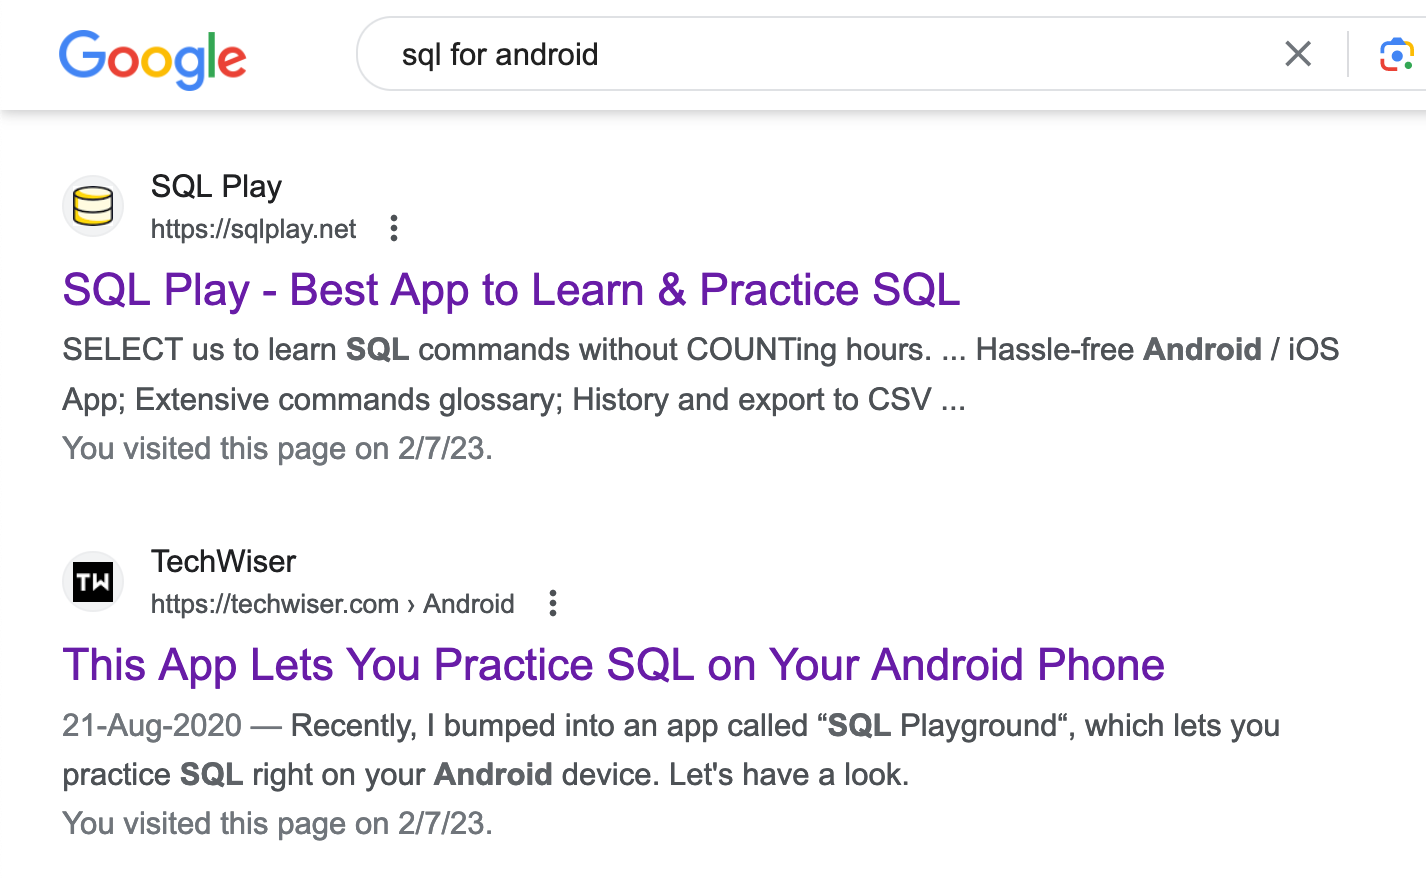 SQLPlay.net ranking #2 on Google